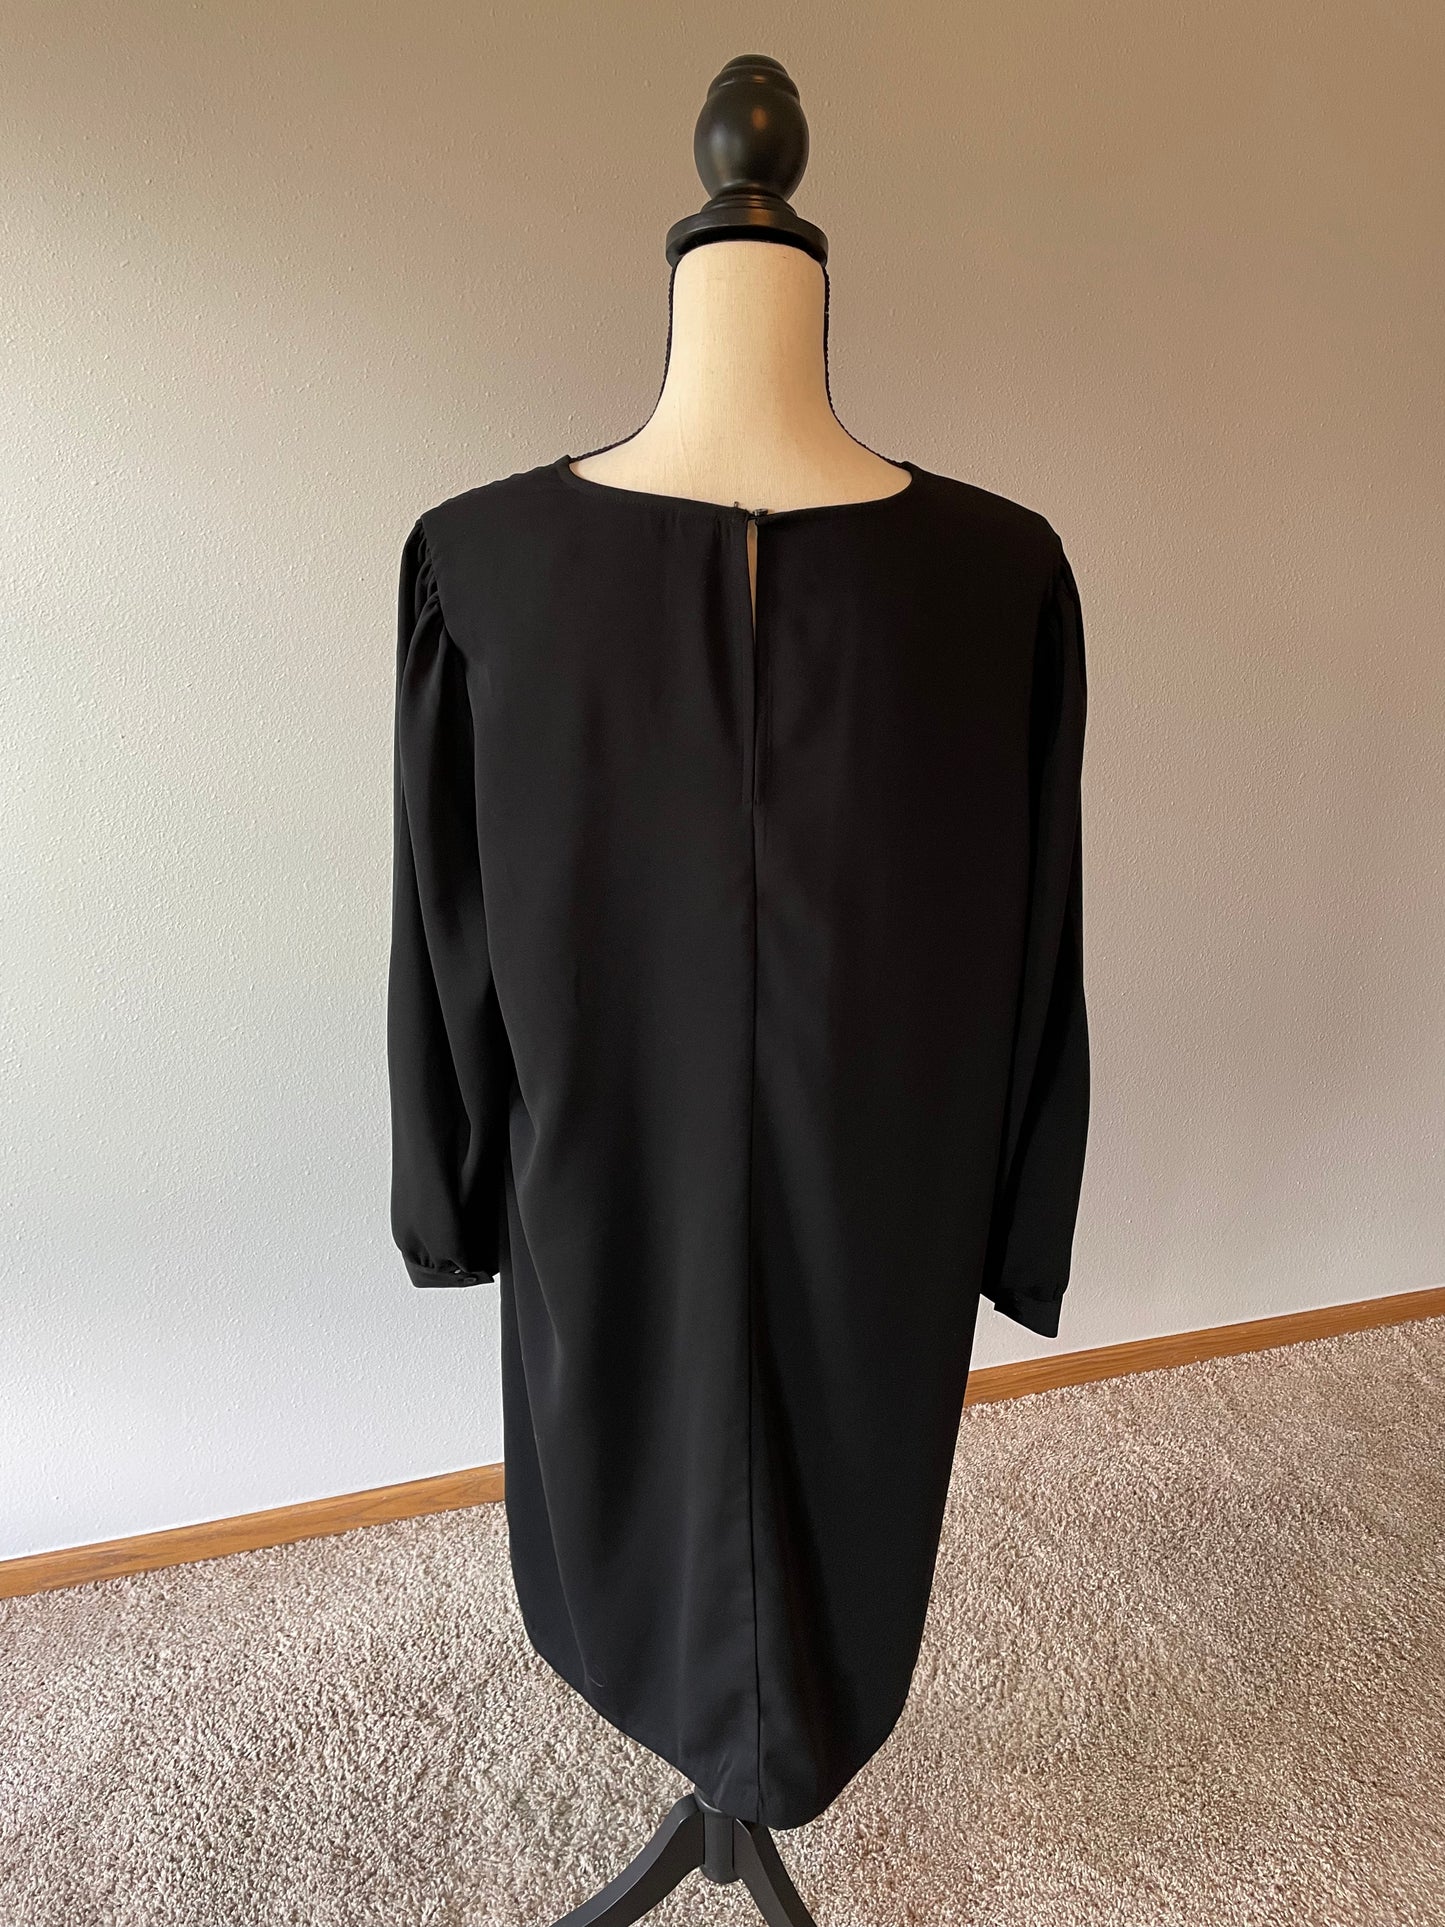 Old Navy Little Black Dress (XL)